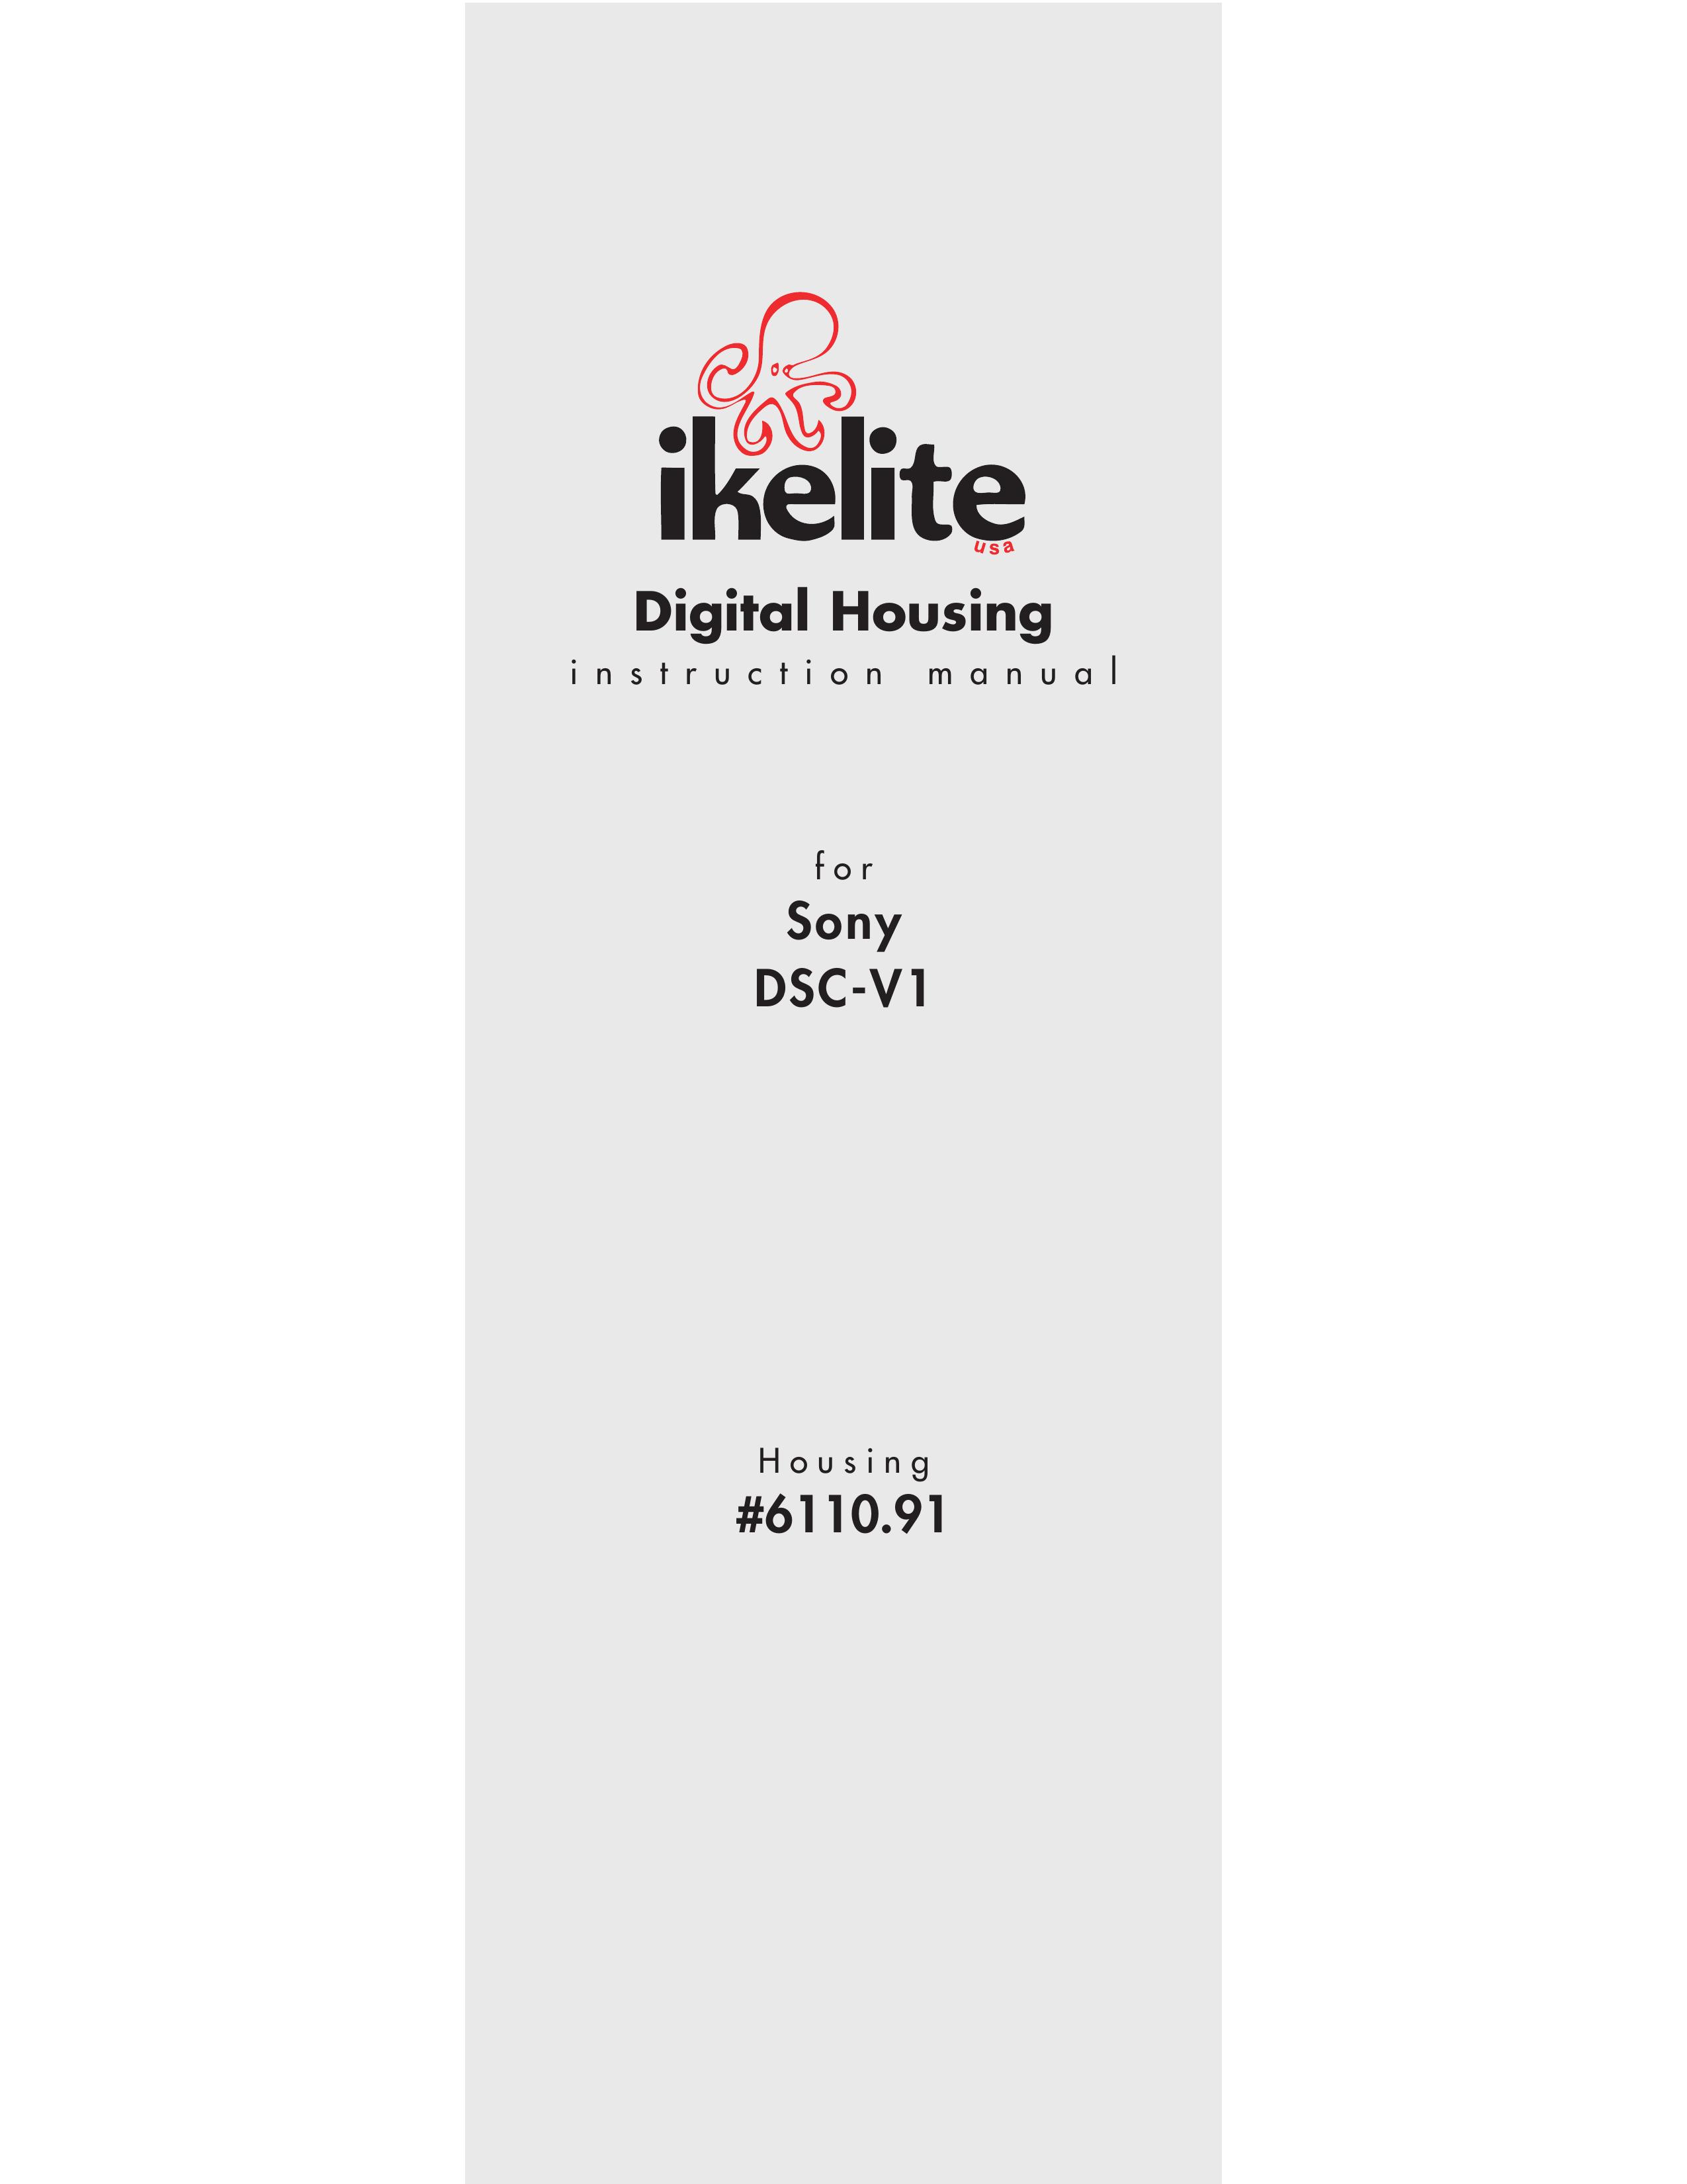 Ikelite DSC-V1 Digital Camera User Manual